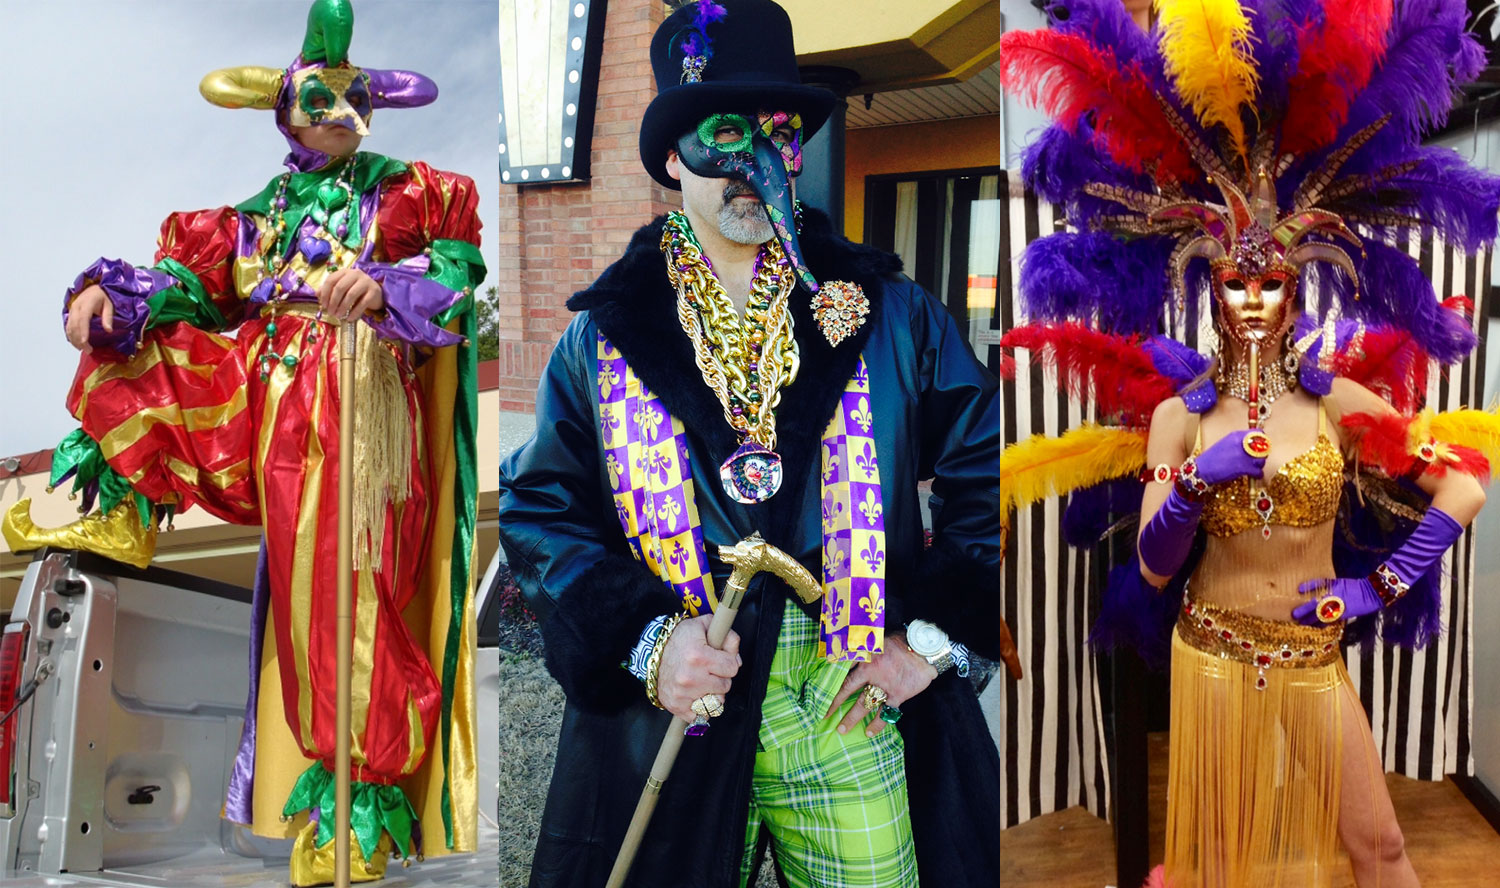 Mardi Gras parade costumes